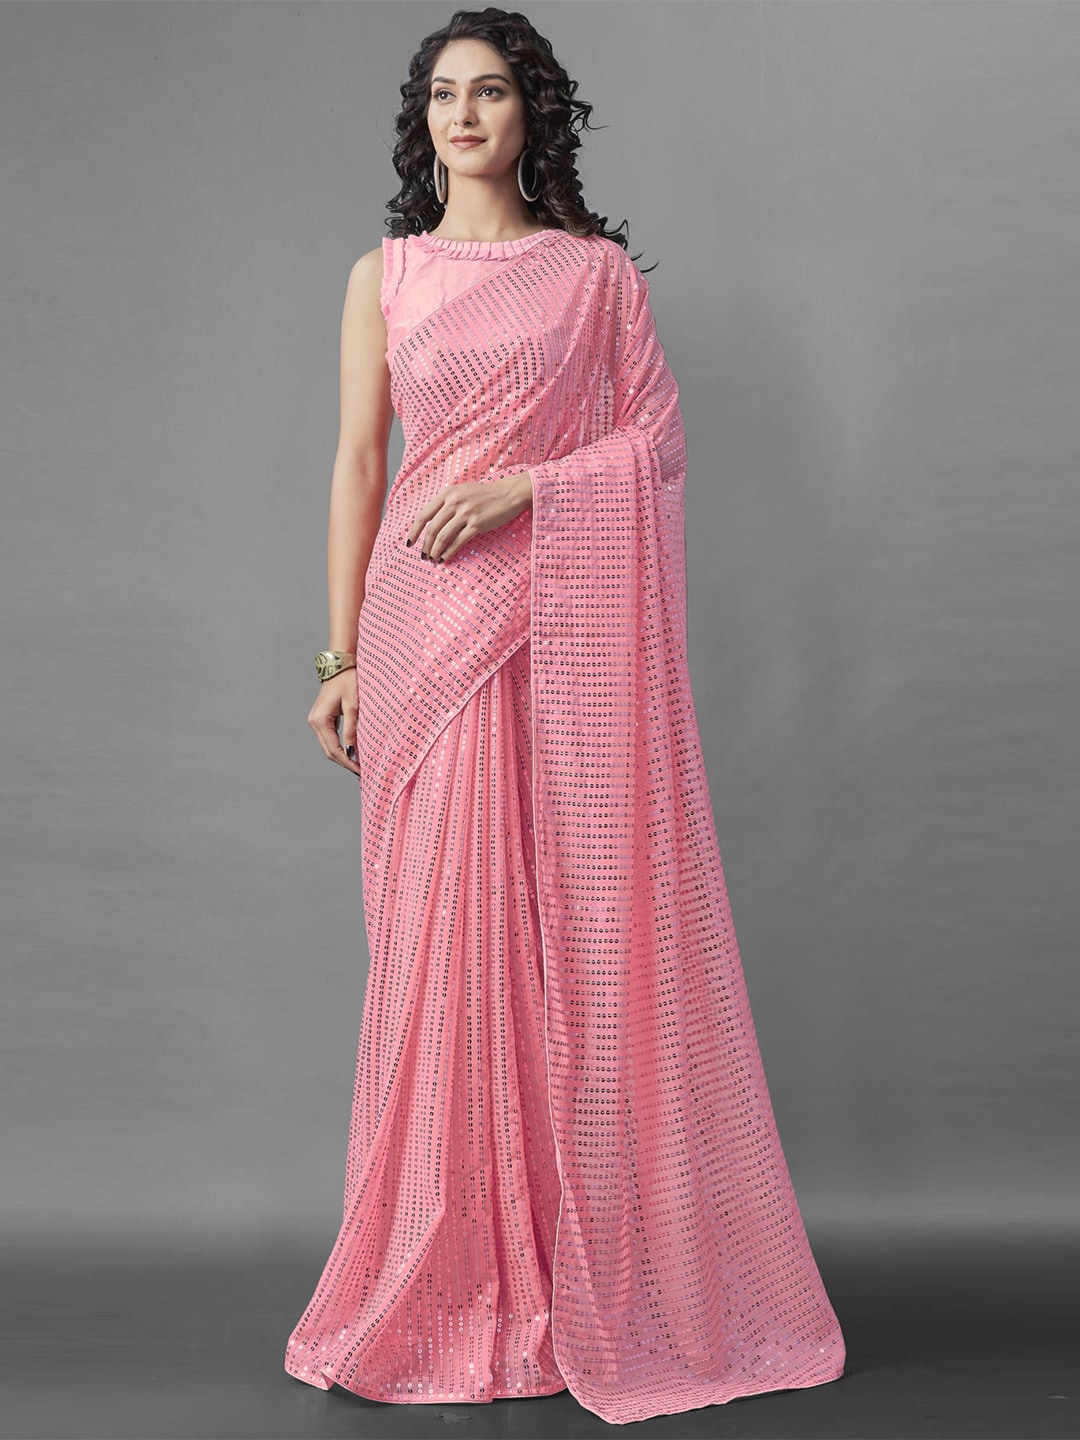 nirja Fab Pink Embellished Sequinned Saree Price in India